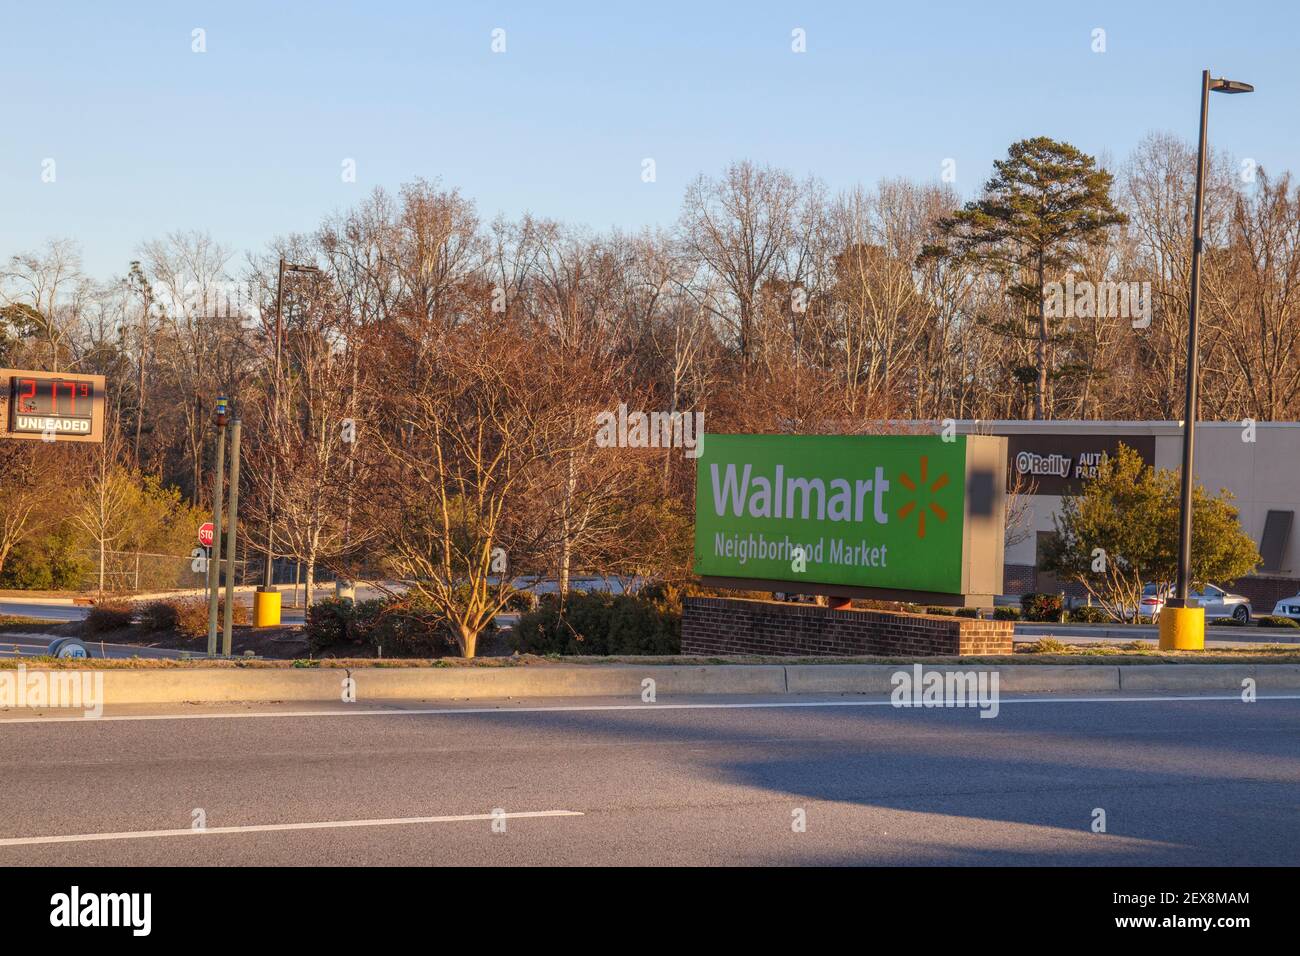 Columbia County, Ga USA - 01 30 21: Gas price at Walmart Neighborhood market gas station street sign Stock Photo